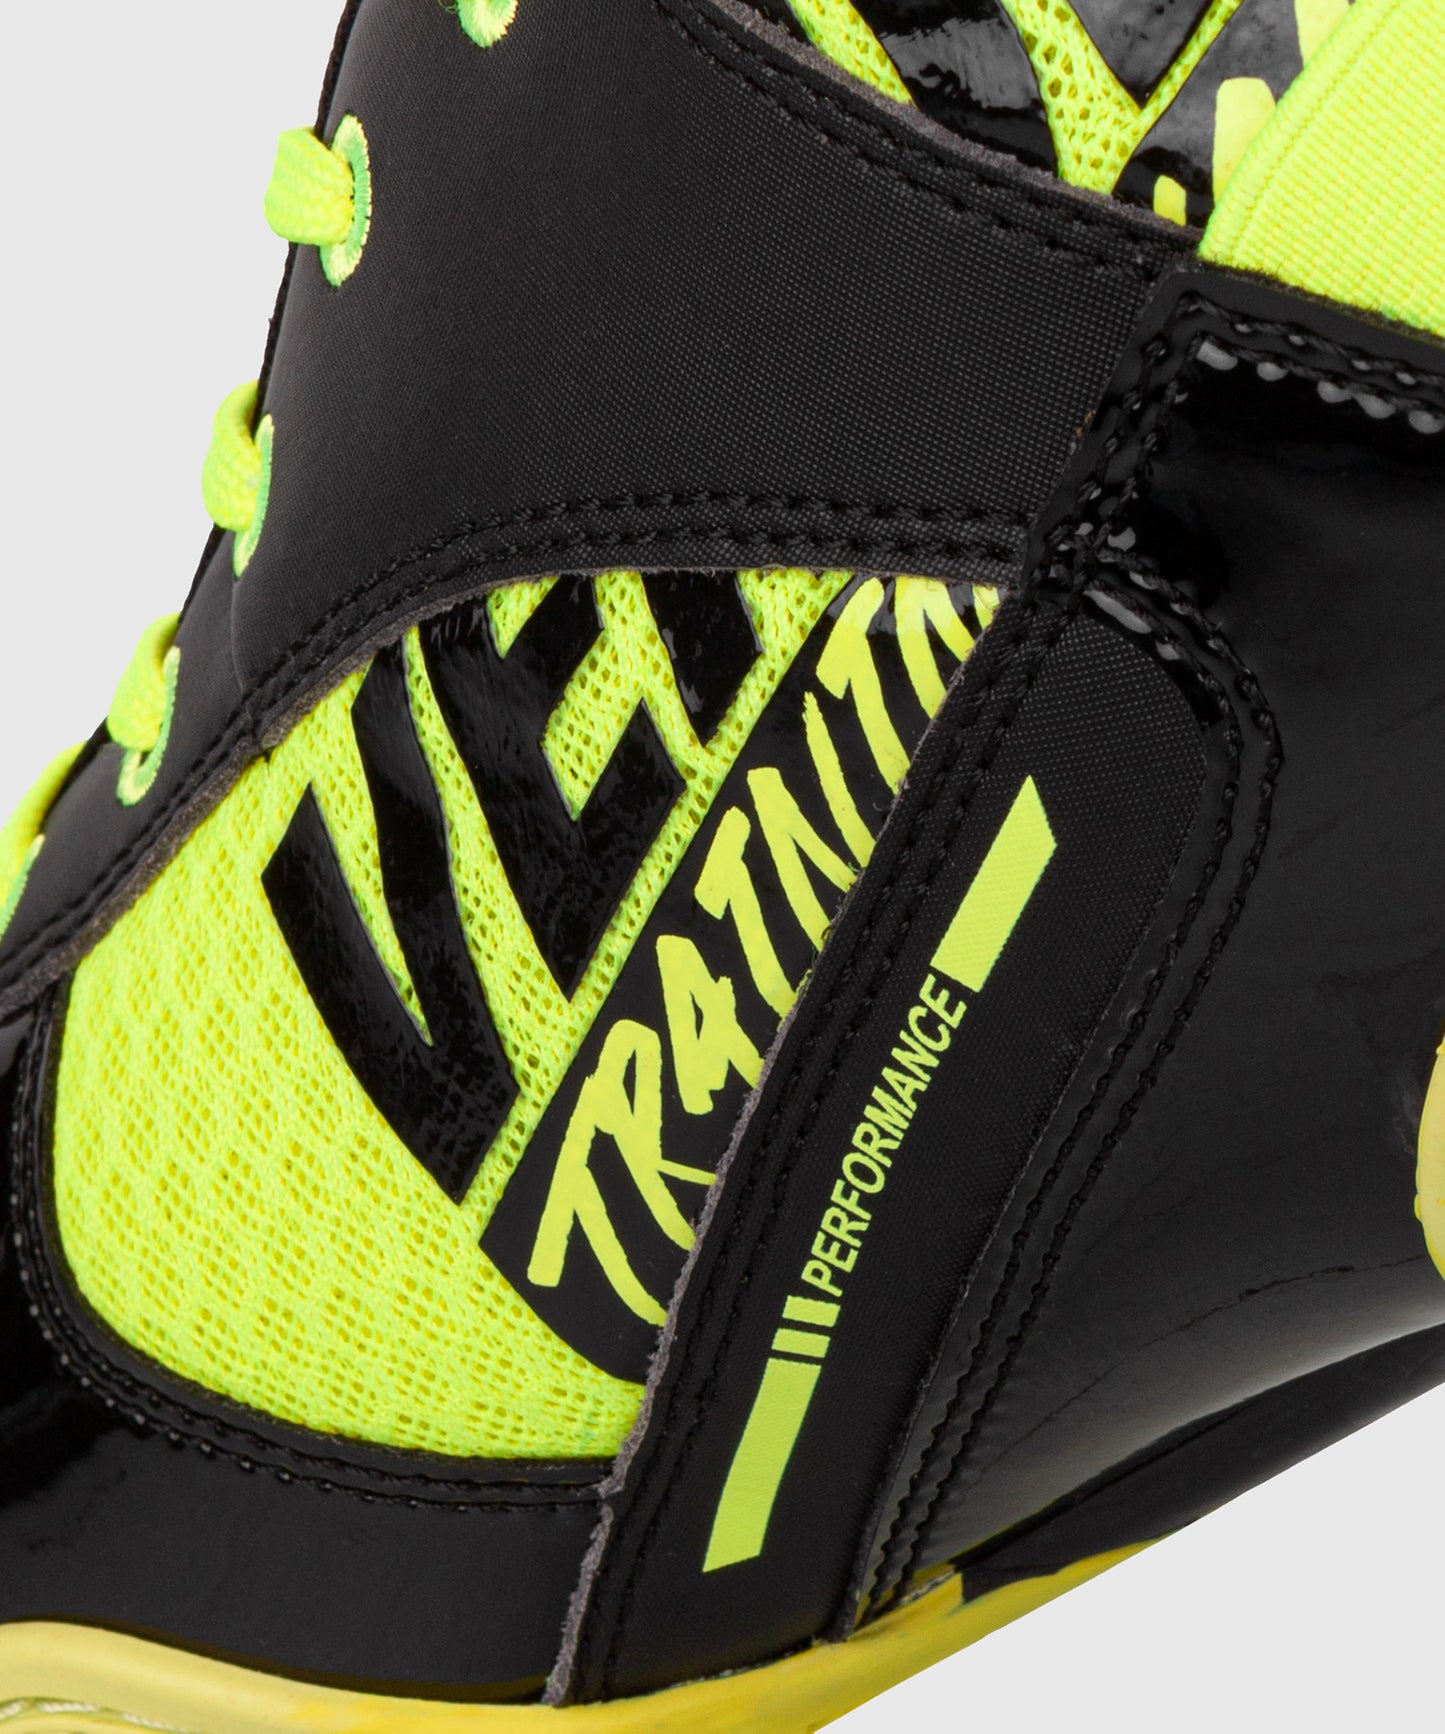 Venum Elite VTC 2 Edition Boxing Shoes - Neo Yellow/Black